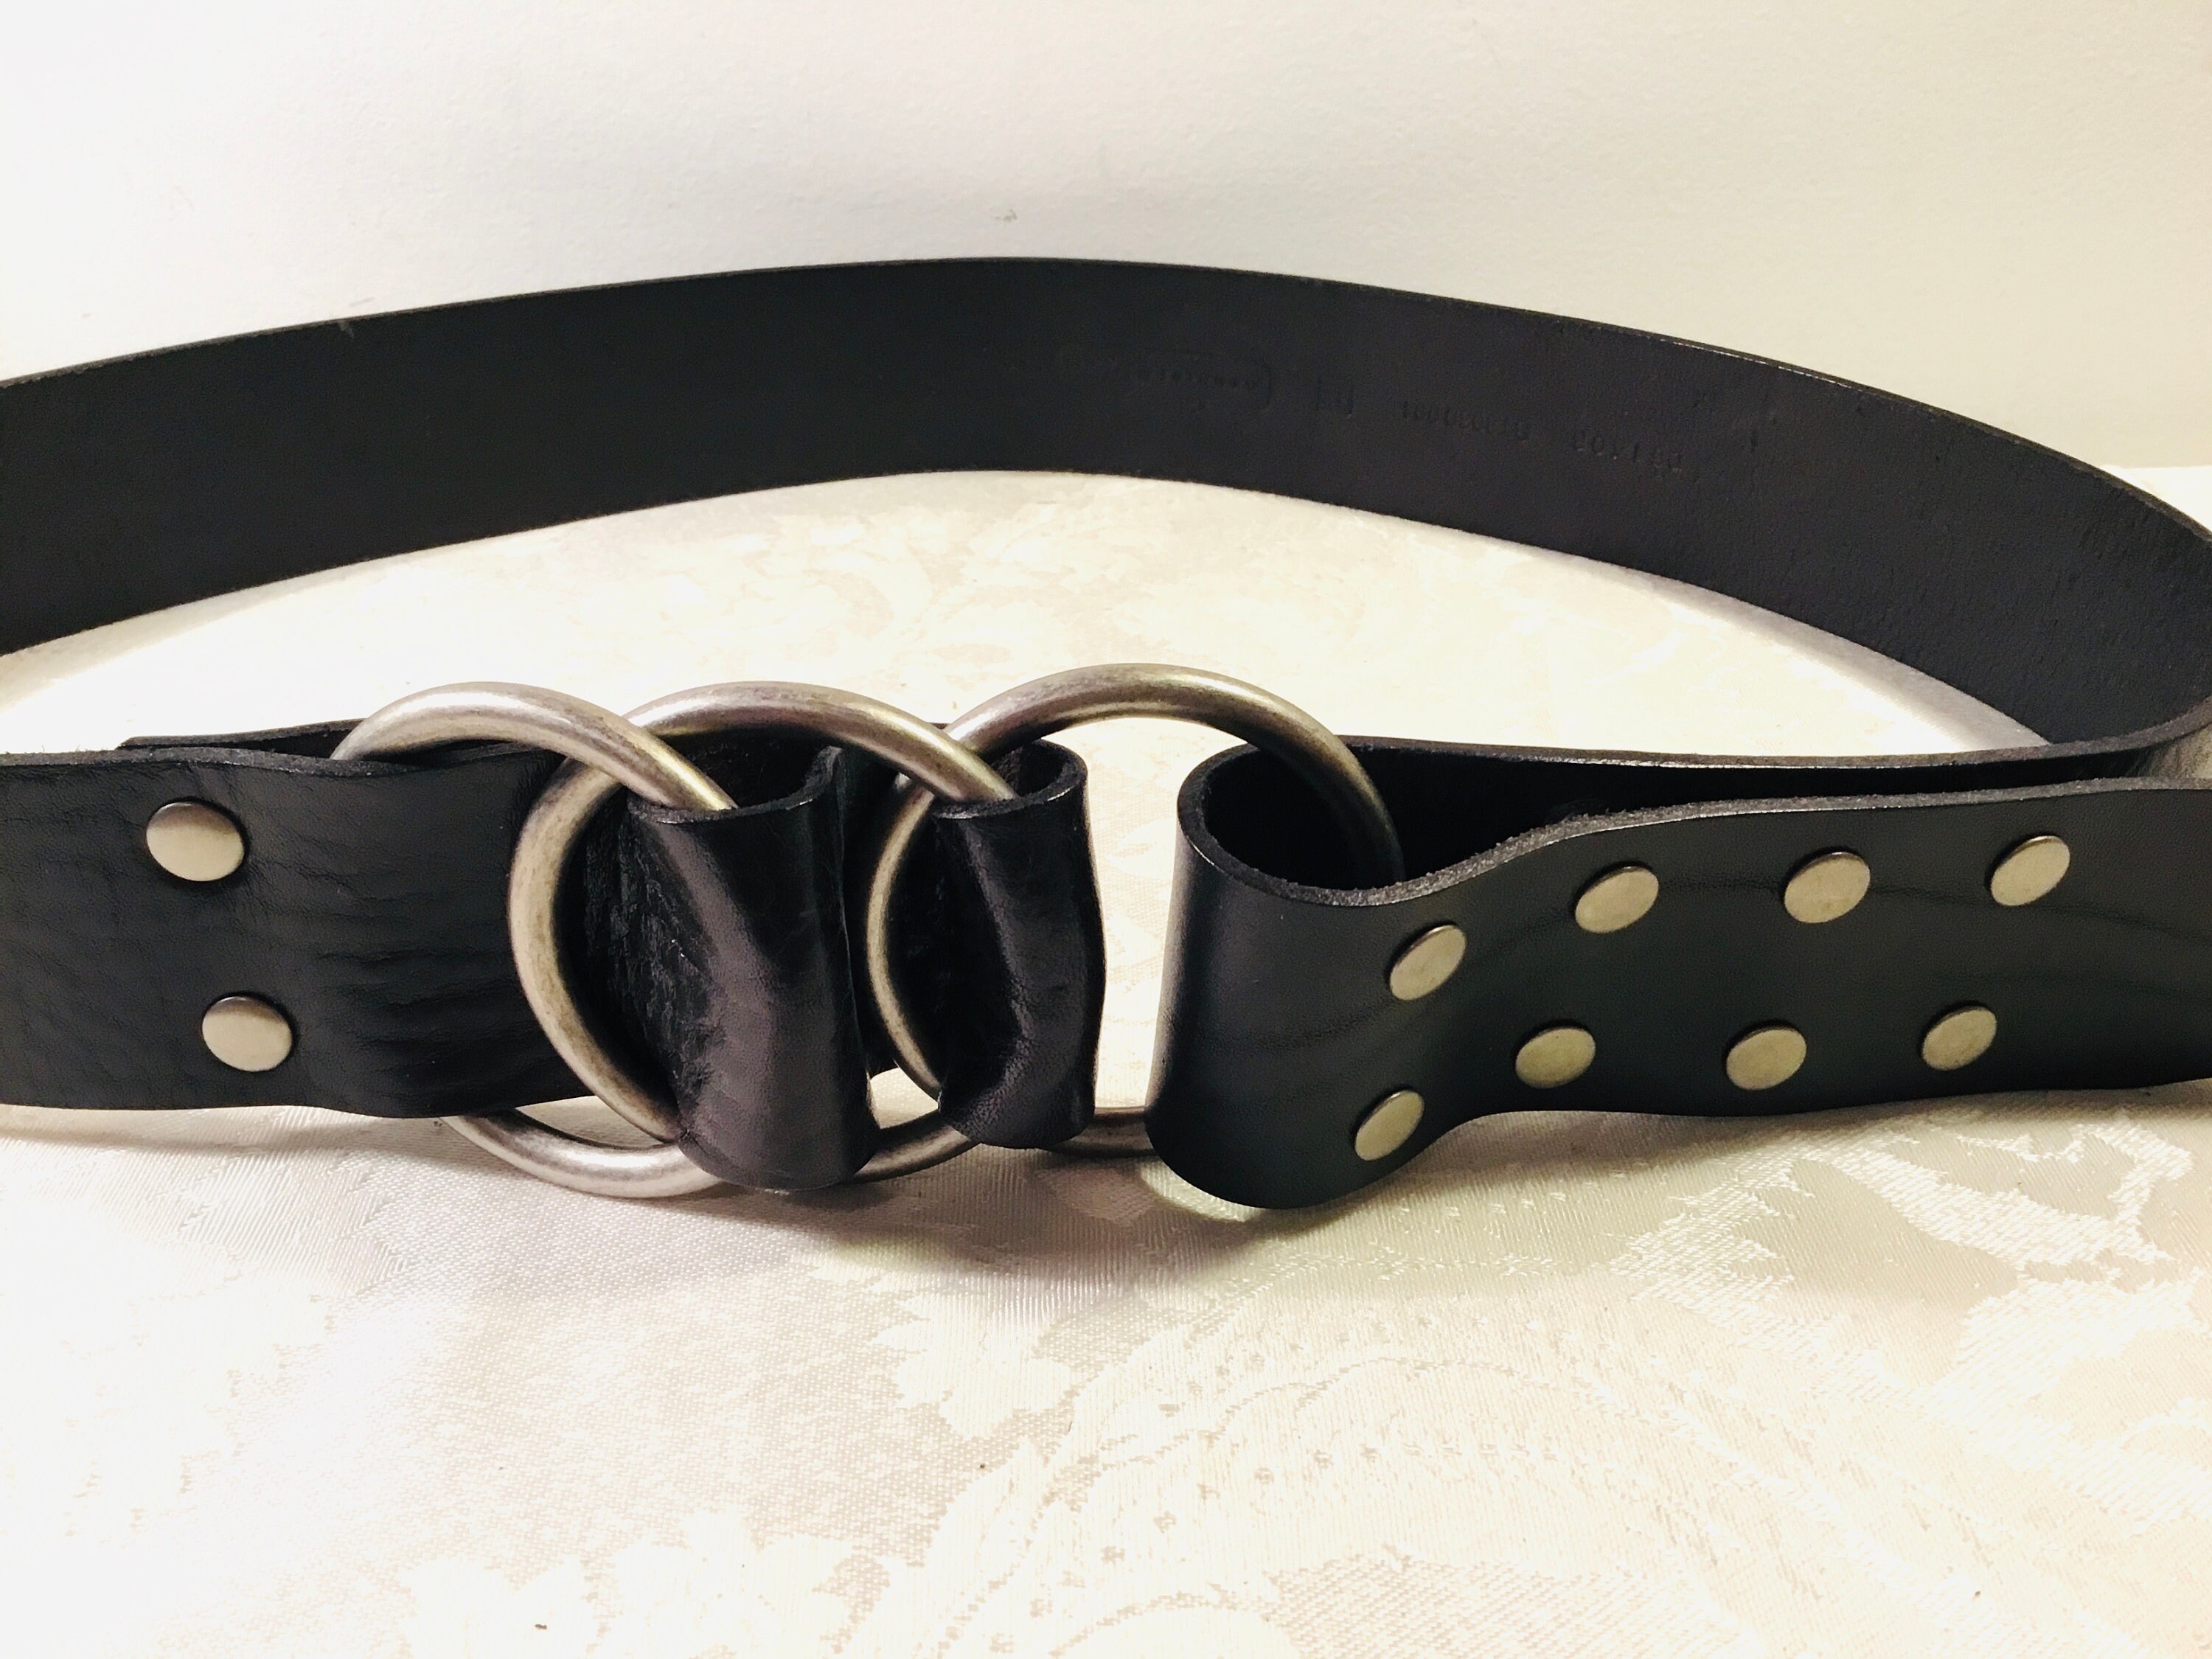 Buy the Mens Black Leather Adjustable Studded Silver-Tone Buckle Waist Belt  Size 32